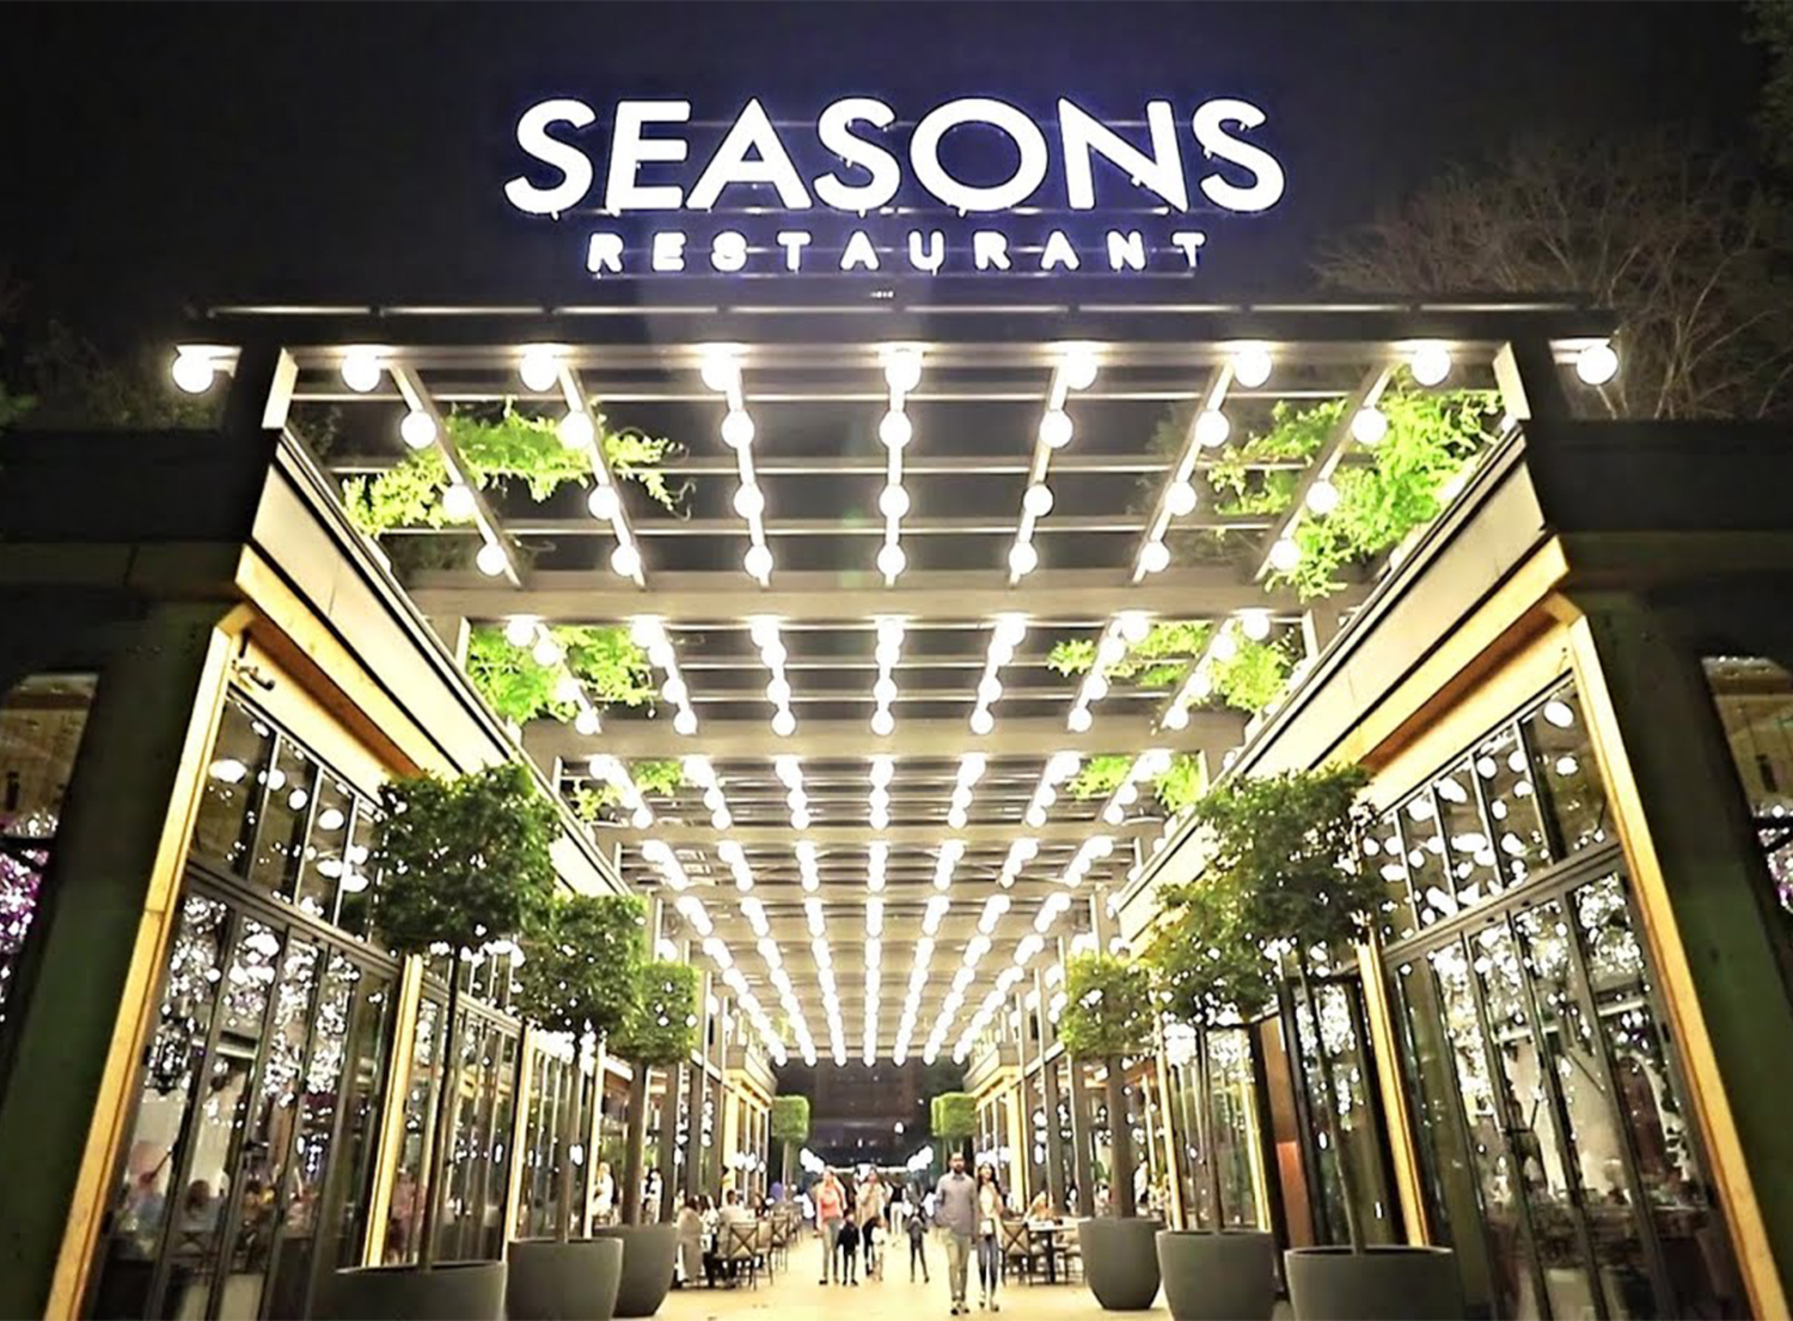 “Seasons” Restaurant